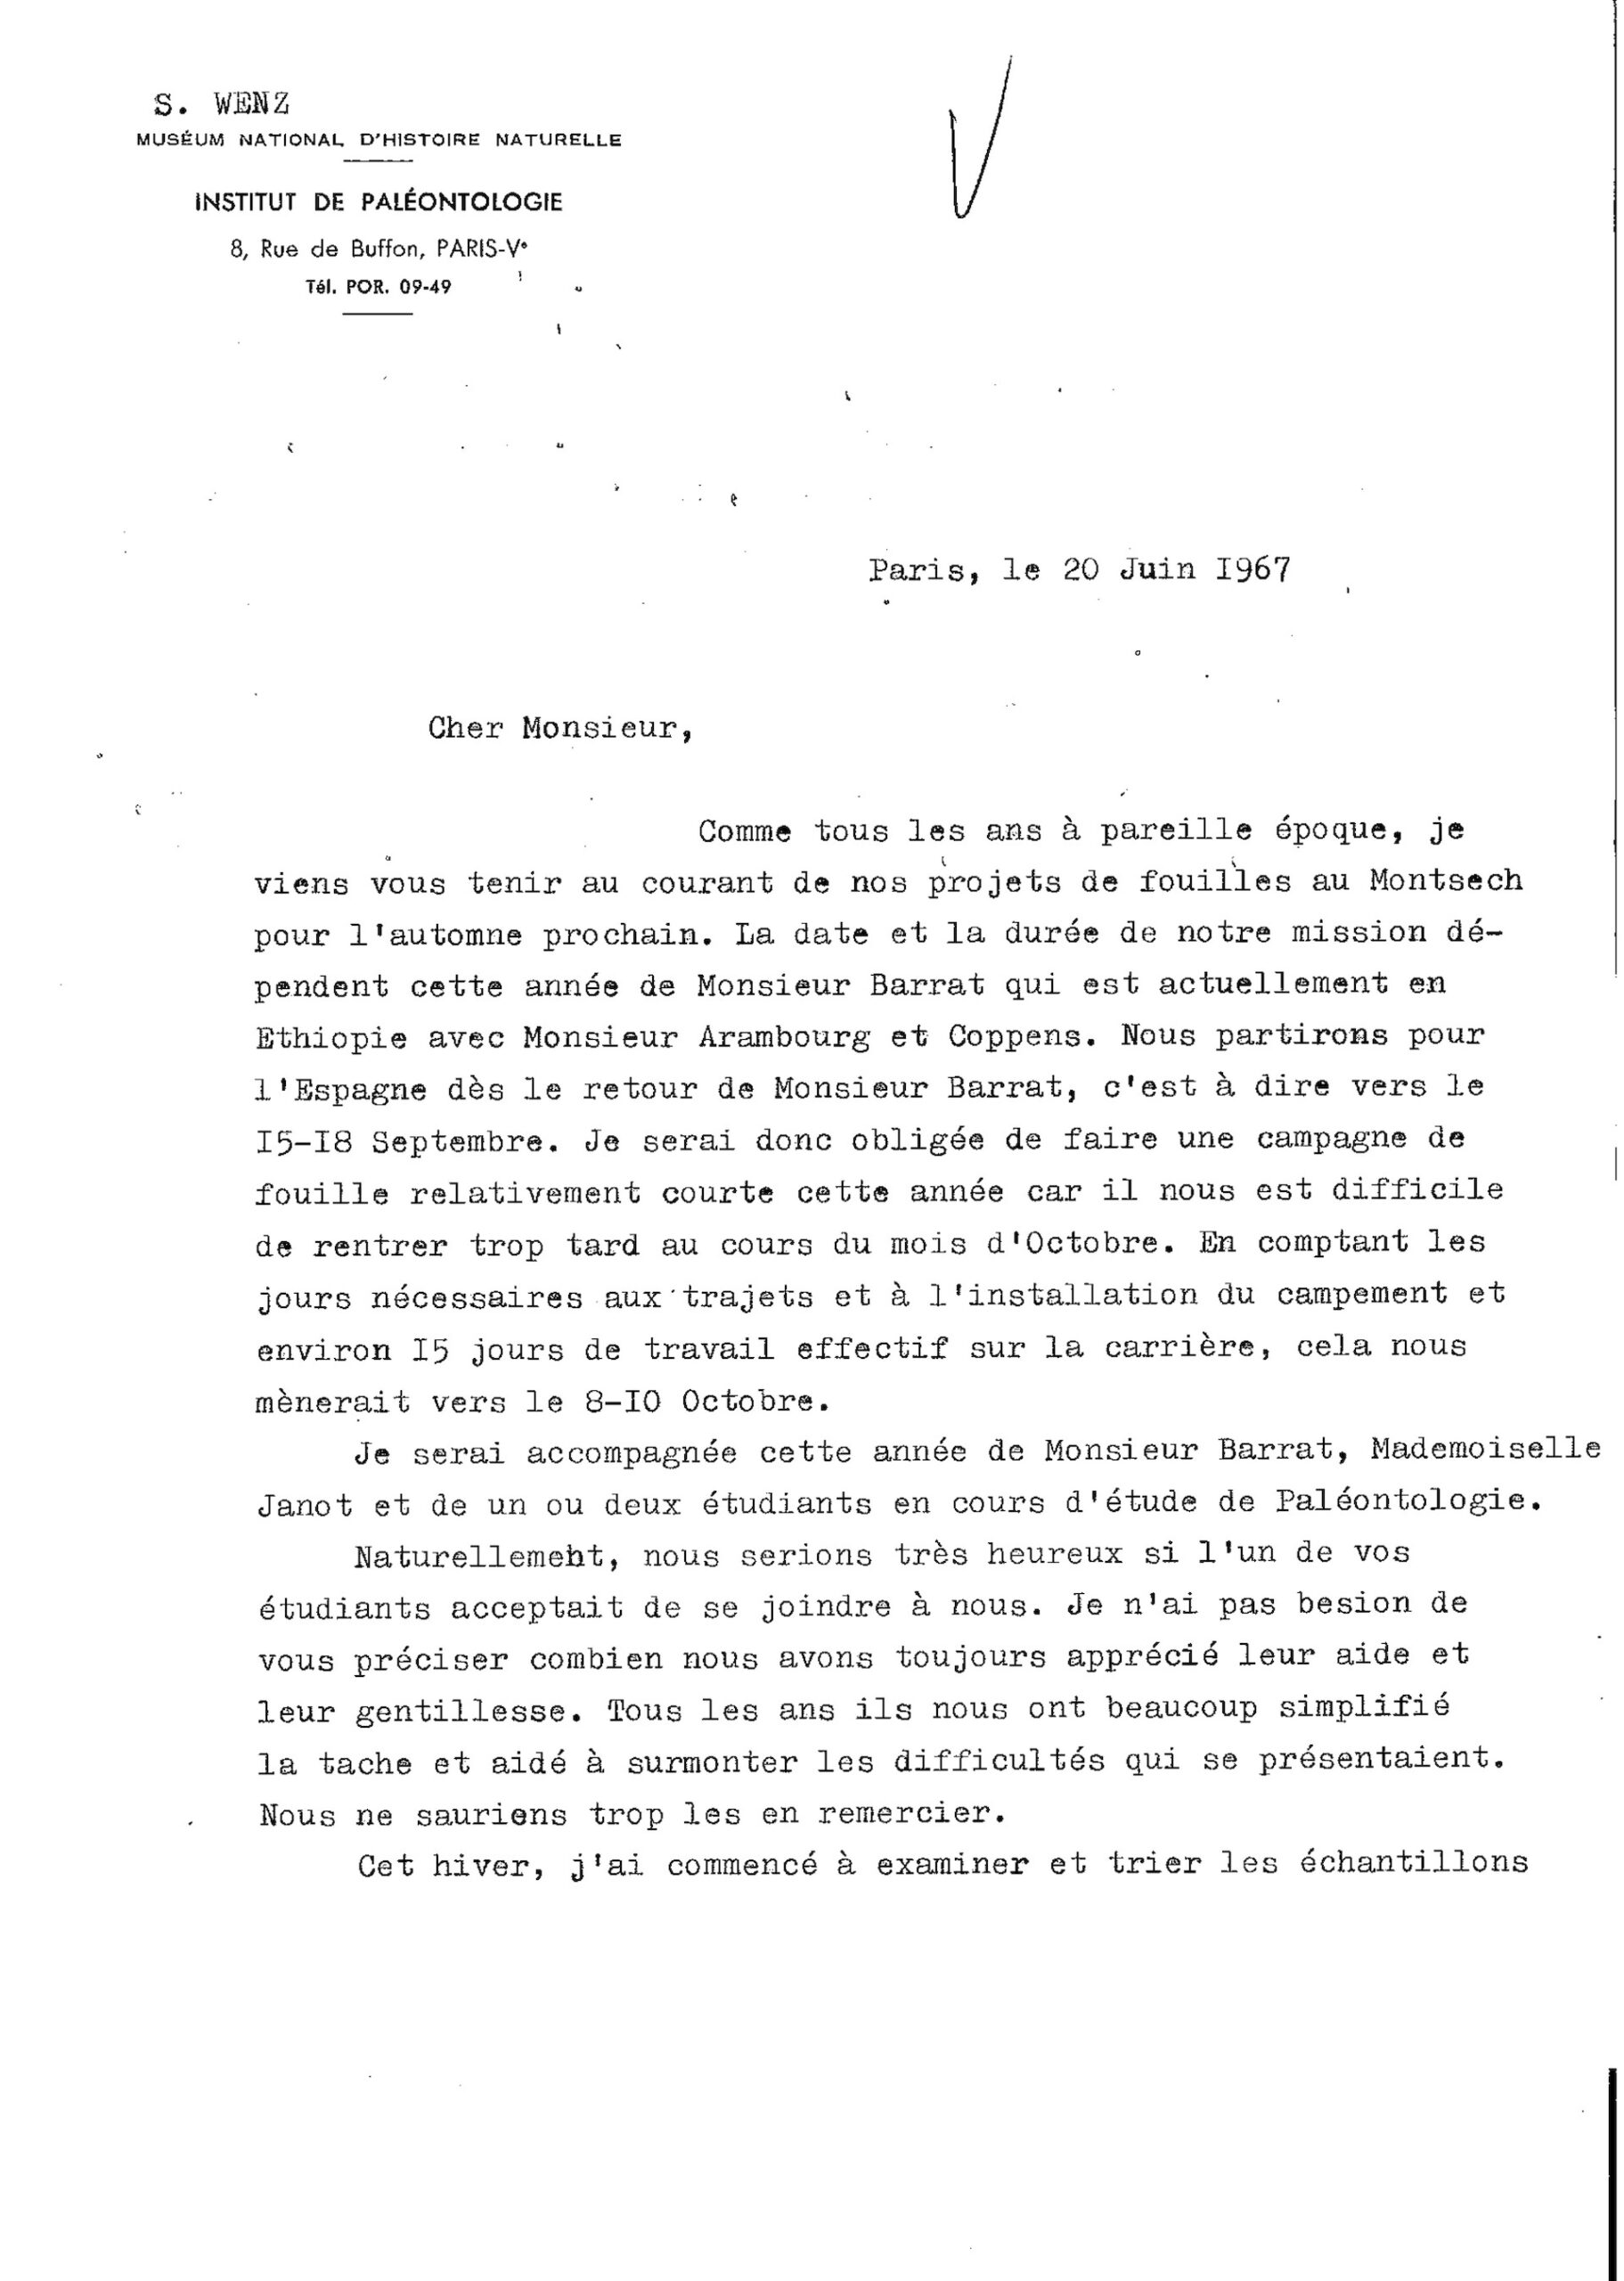 Carta de Sylvie Wenz a Crusafont, en data 20 de juny de 1967. ©Arxiu Miquel Crusafont/ICP.